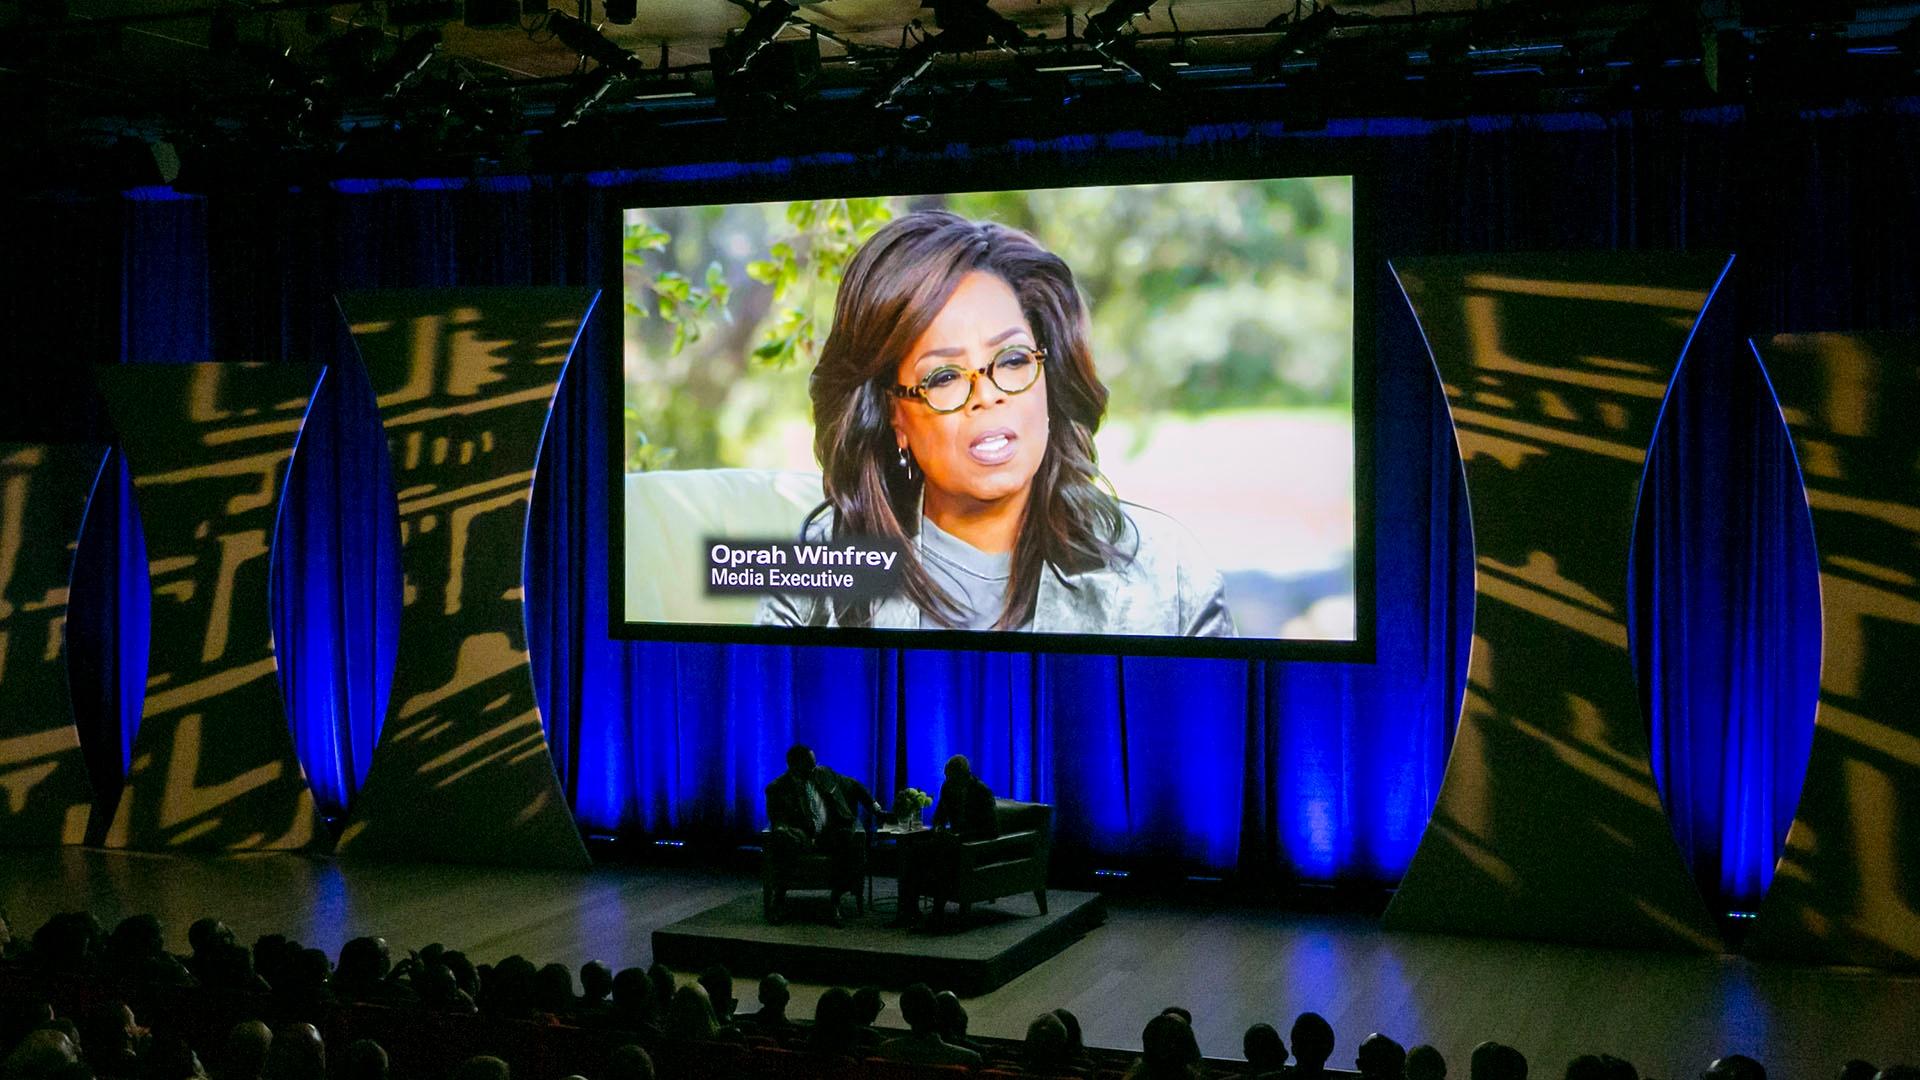 A video appearance from Oprah Winfrey